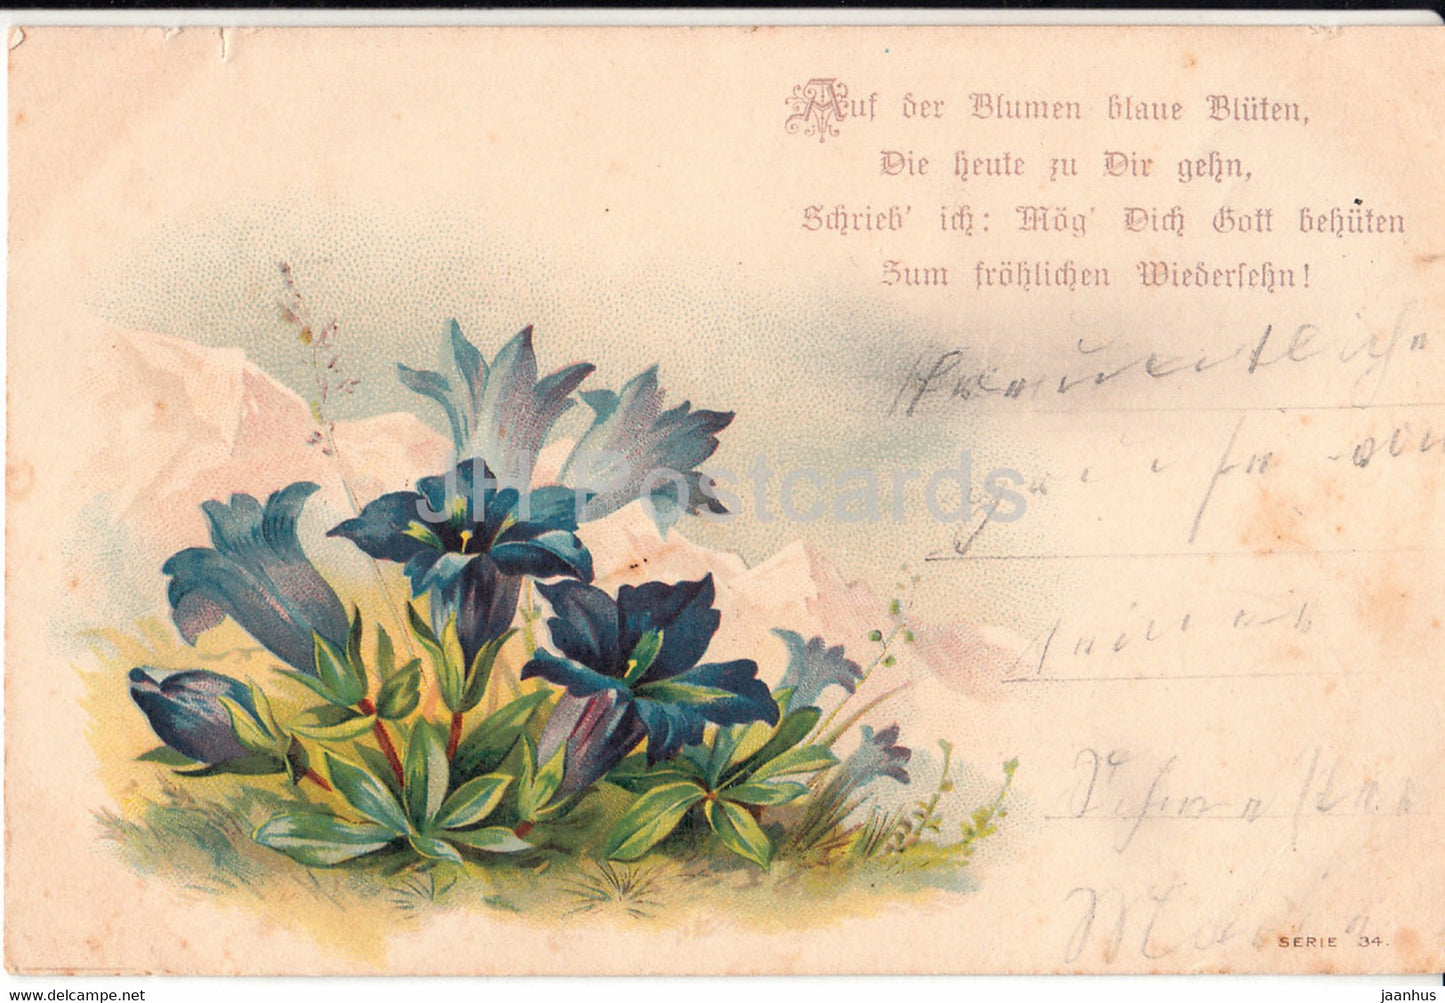 Greeting Card - Auf der Blumen blaue Bluten - Serie 34 - blue flowers - old postcard - 1900 - Germany - used - JH Postcards